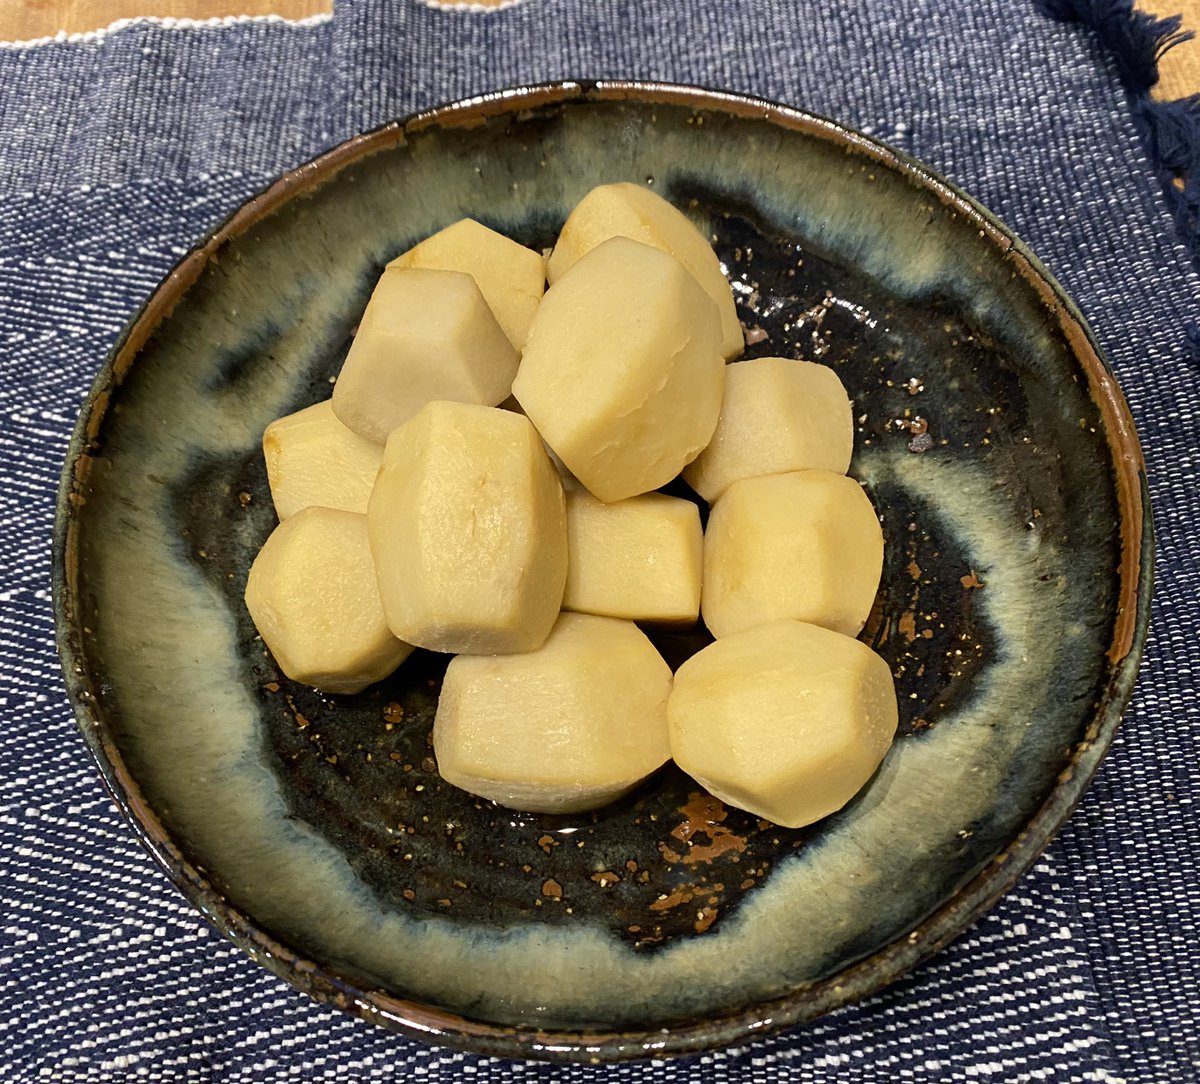 Satoimo no nikkorogashi (Japanese traditional home cuisine) 里芋の煮っころがし